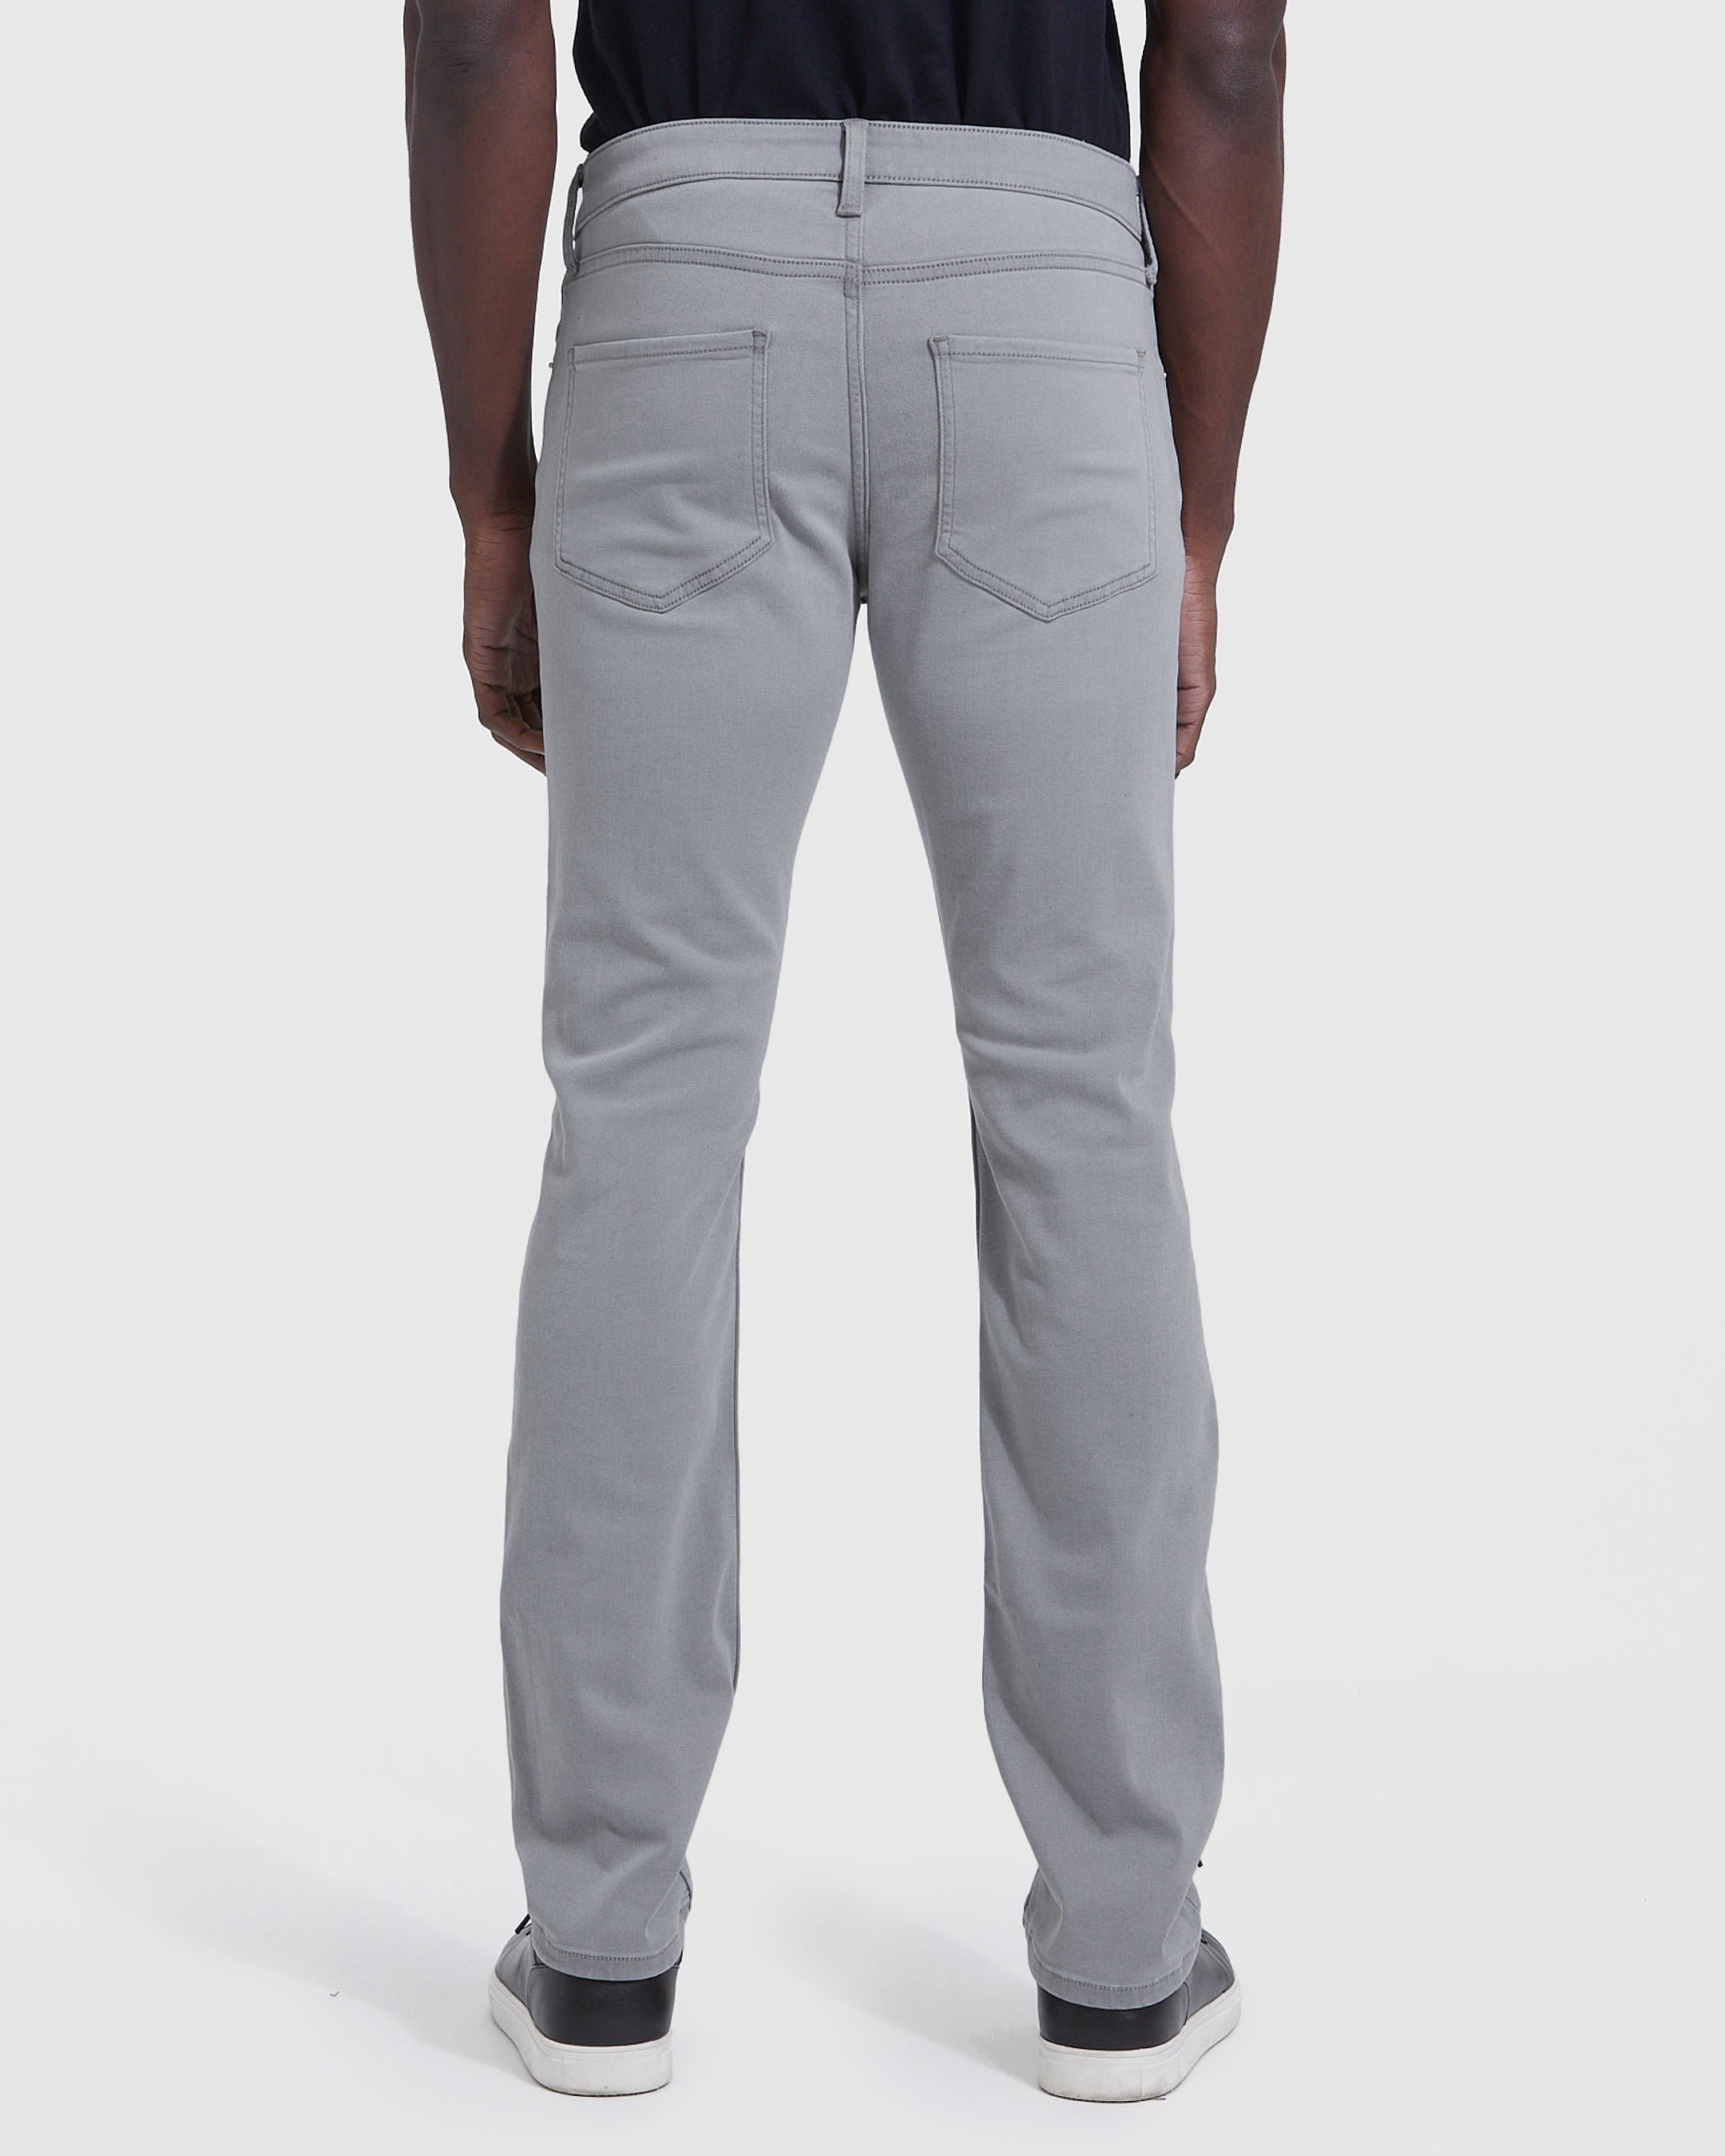 Medium Gray Wash Slim Fit Comfort Jeans